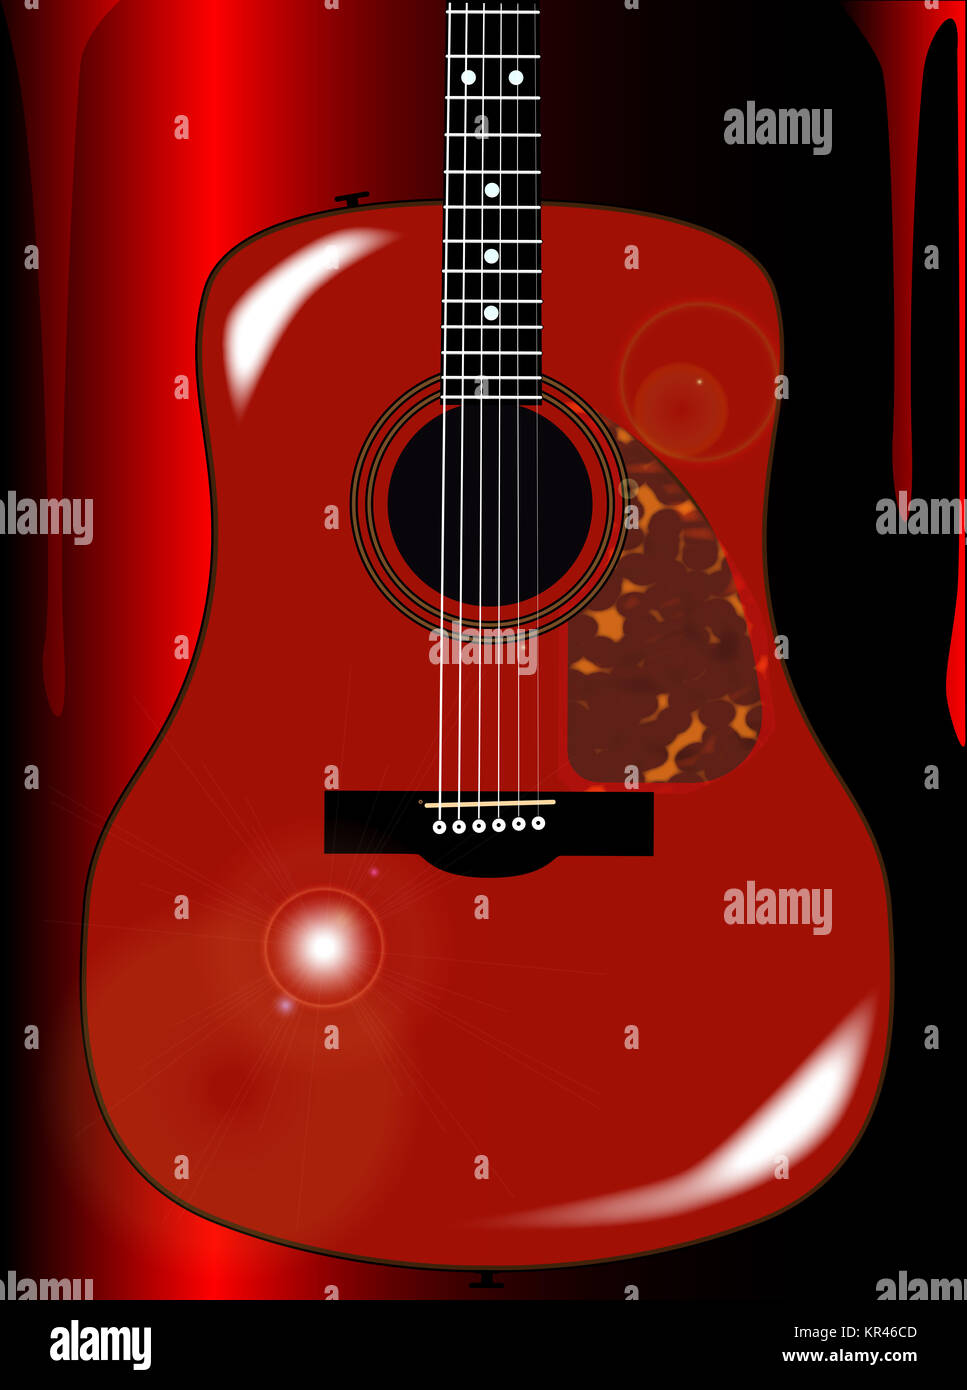 Rote Akustikgitarre Hintergrund Stockfotografie - Alamy